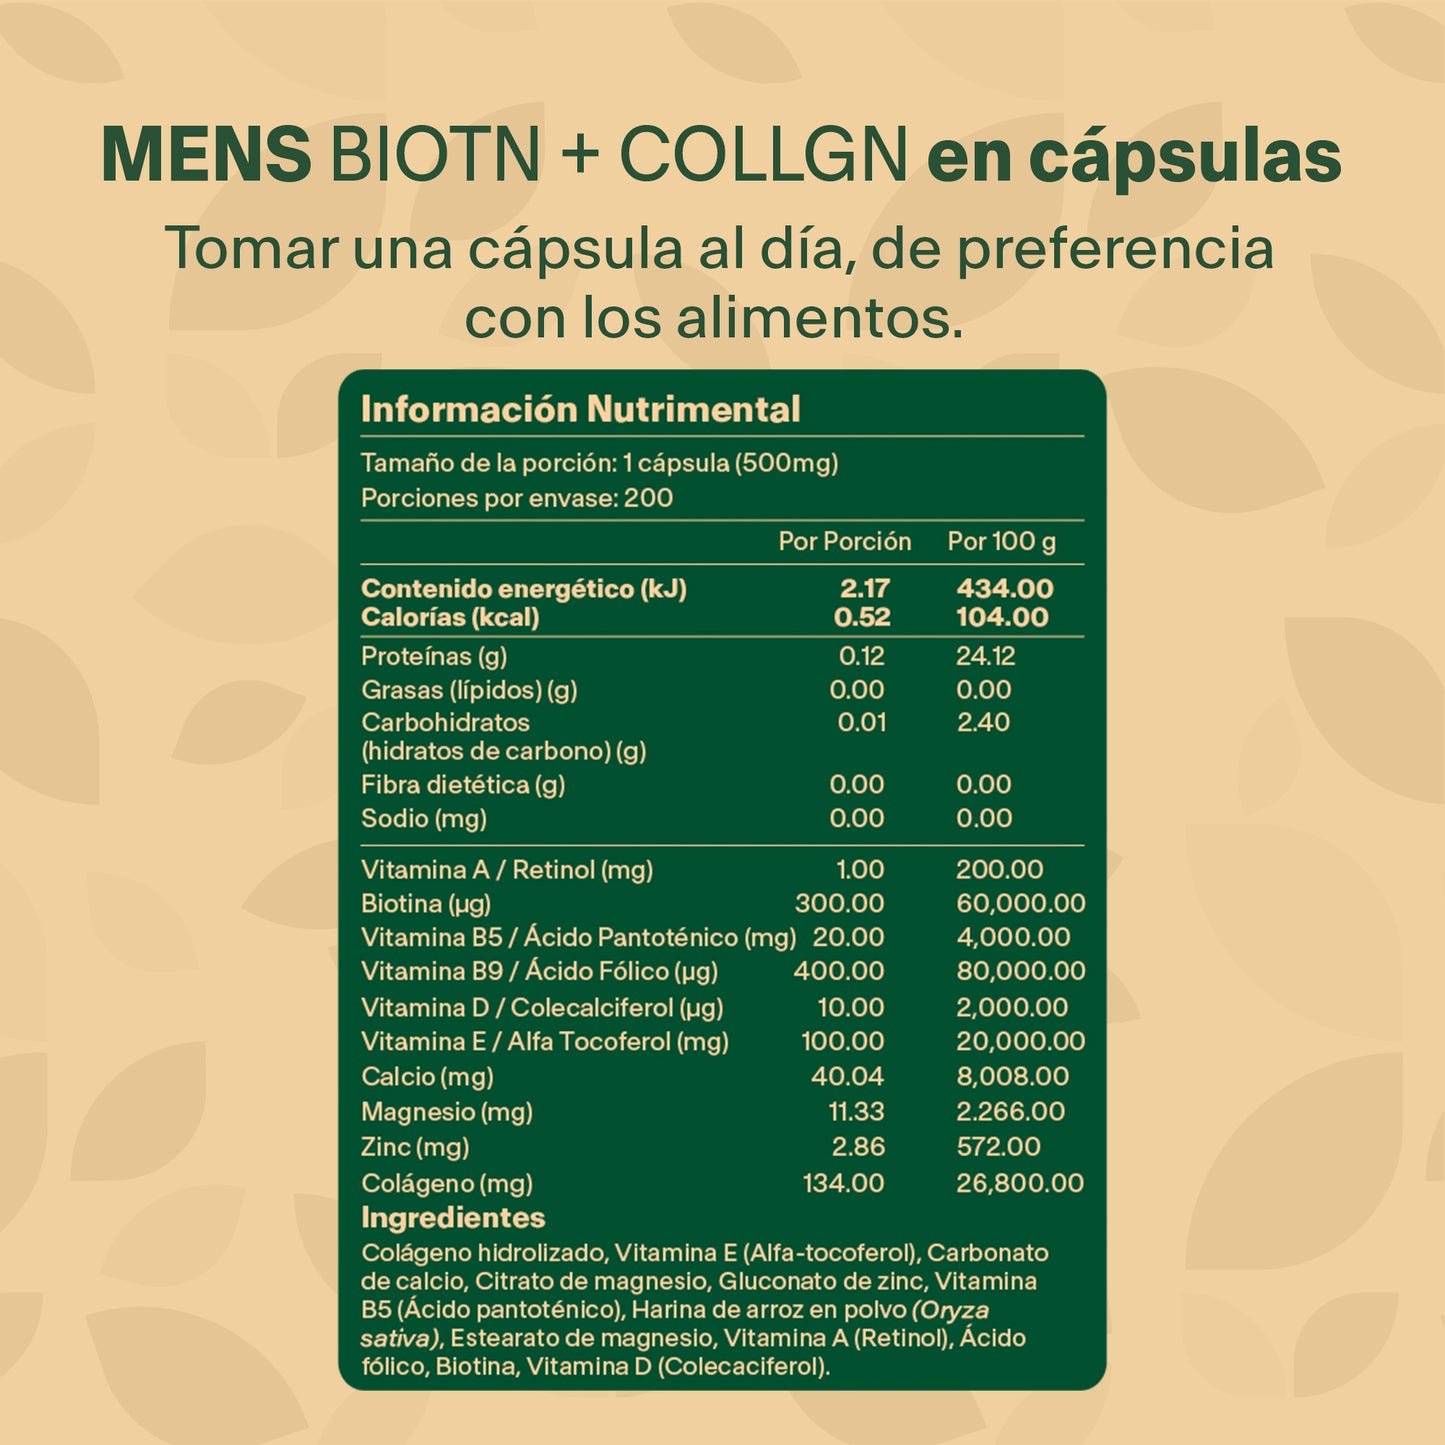 MENS BIOTN + COLLAGN  | Colágeno Hidrolizado para Hombre